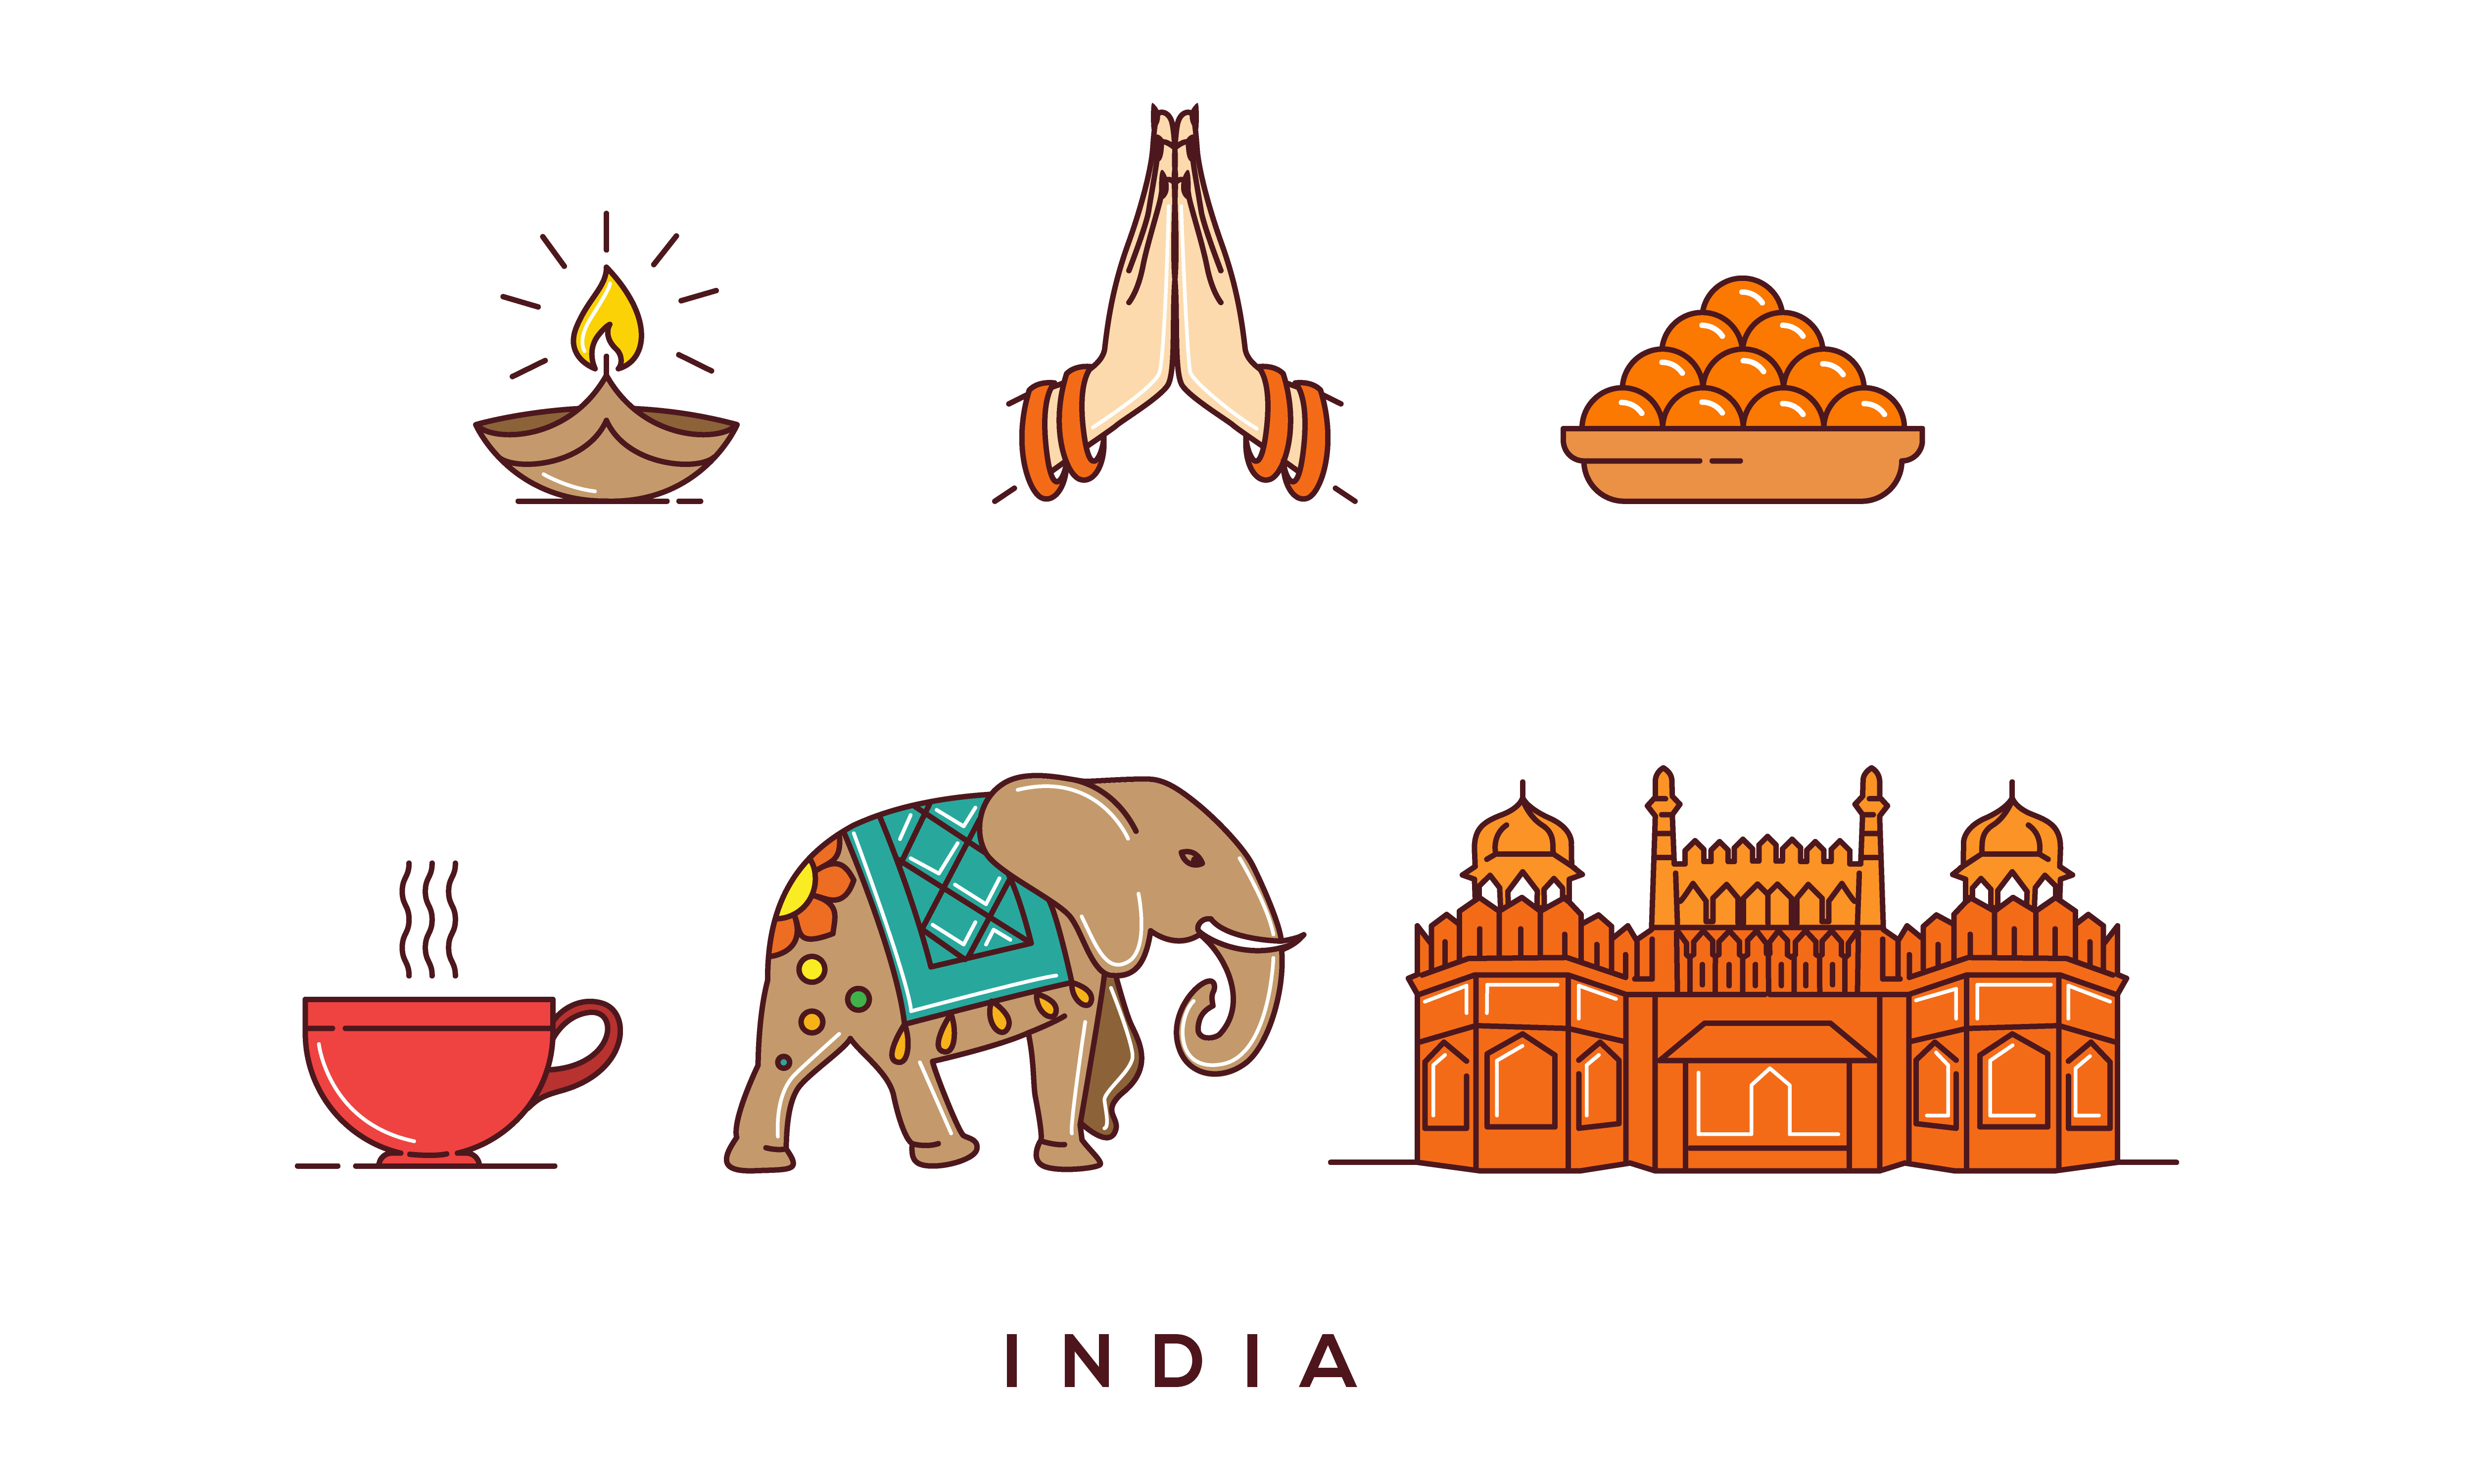 Adobe clipart house india. Designcrowd icons contest creative